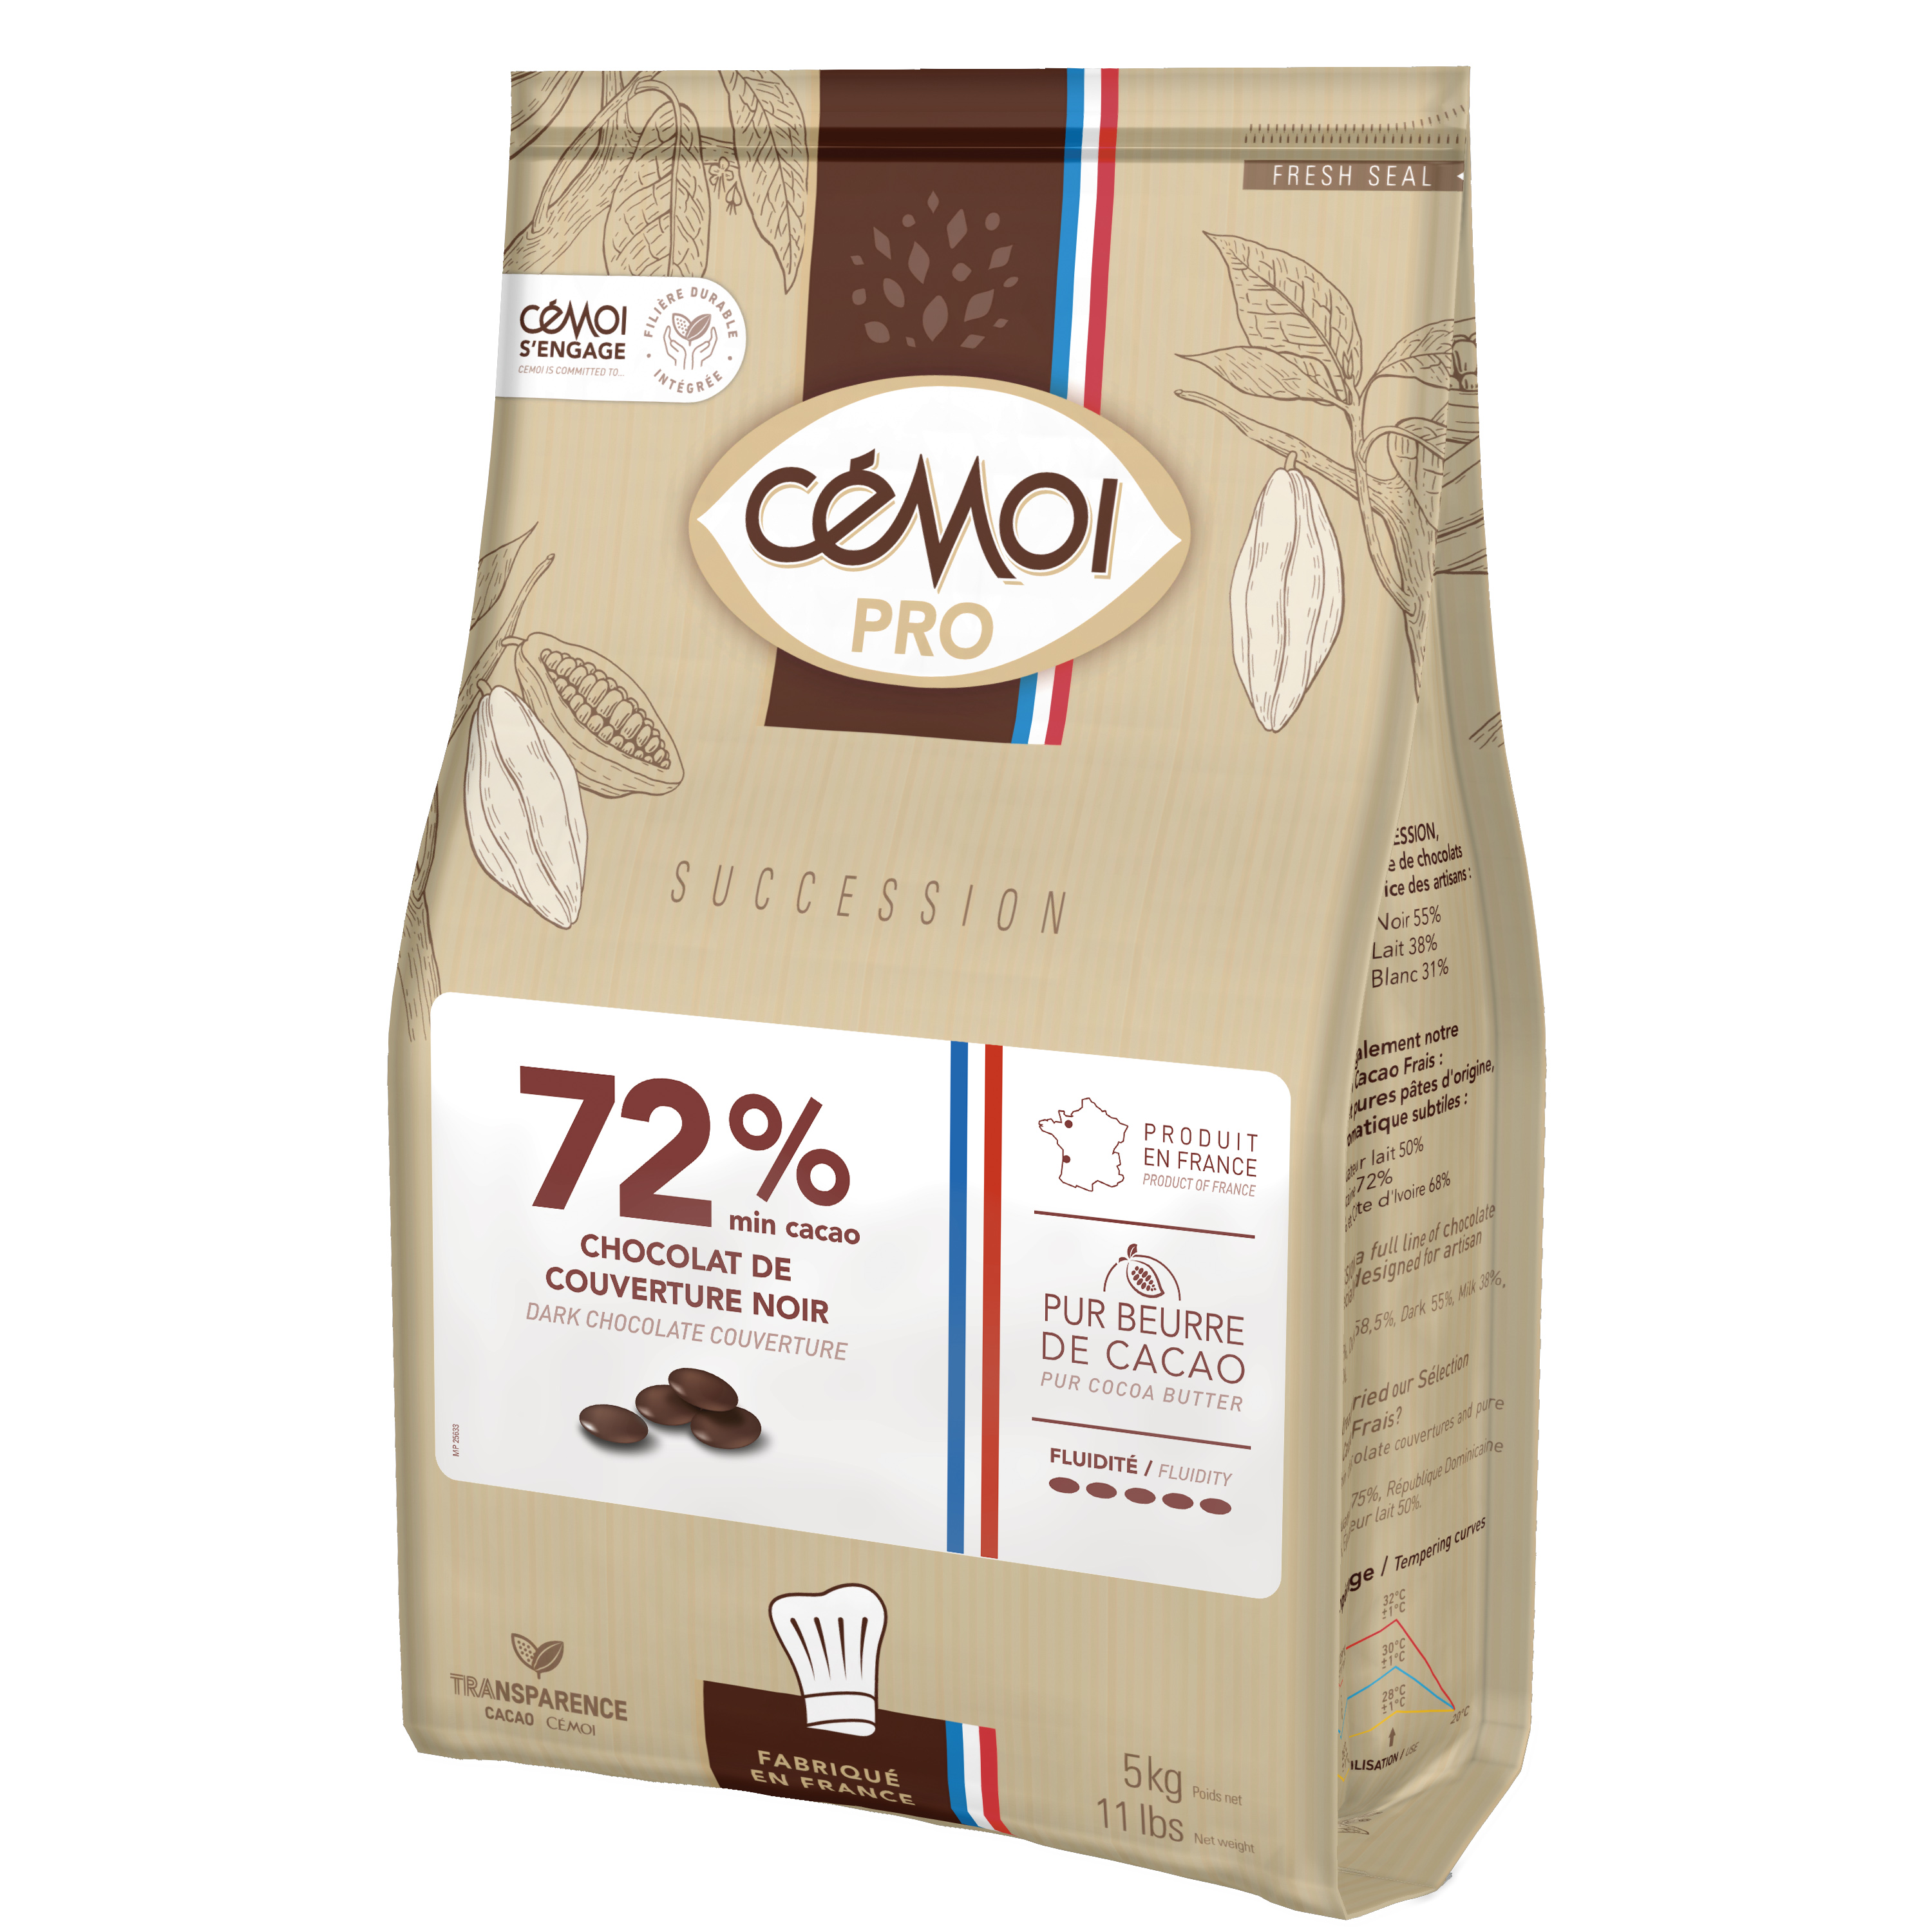 Chocolat Cémoi 72% de cacao, de la gamme "Transparence cacao" ©